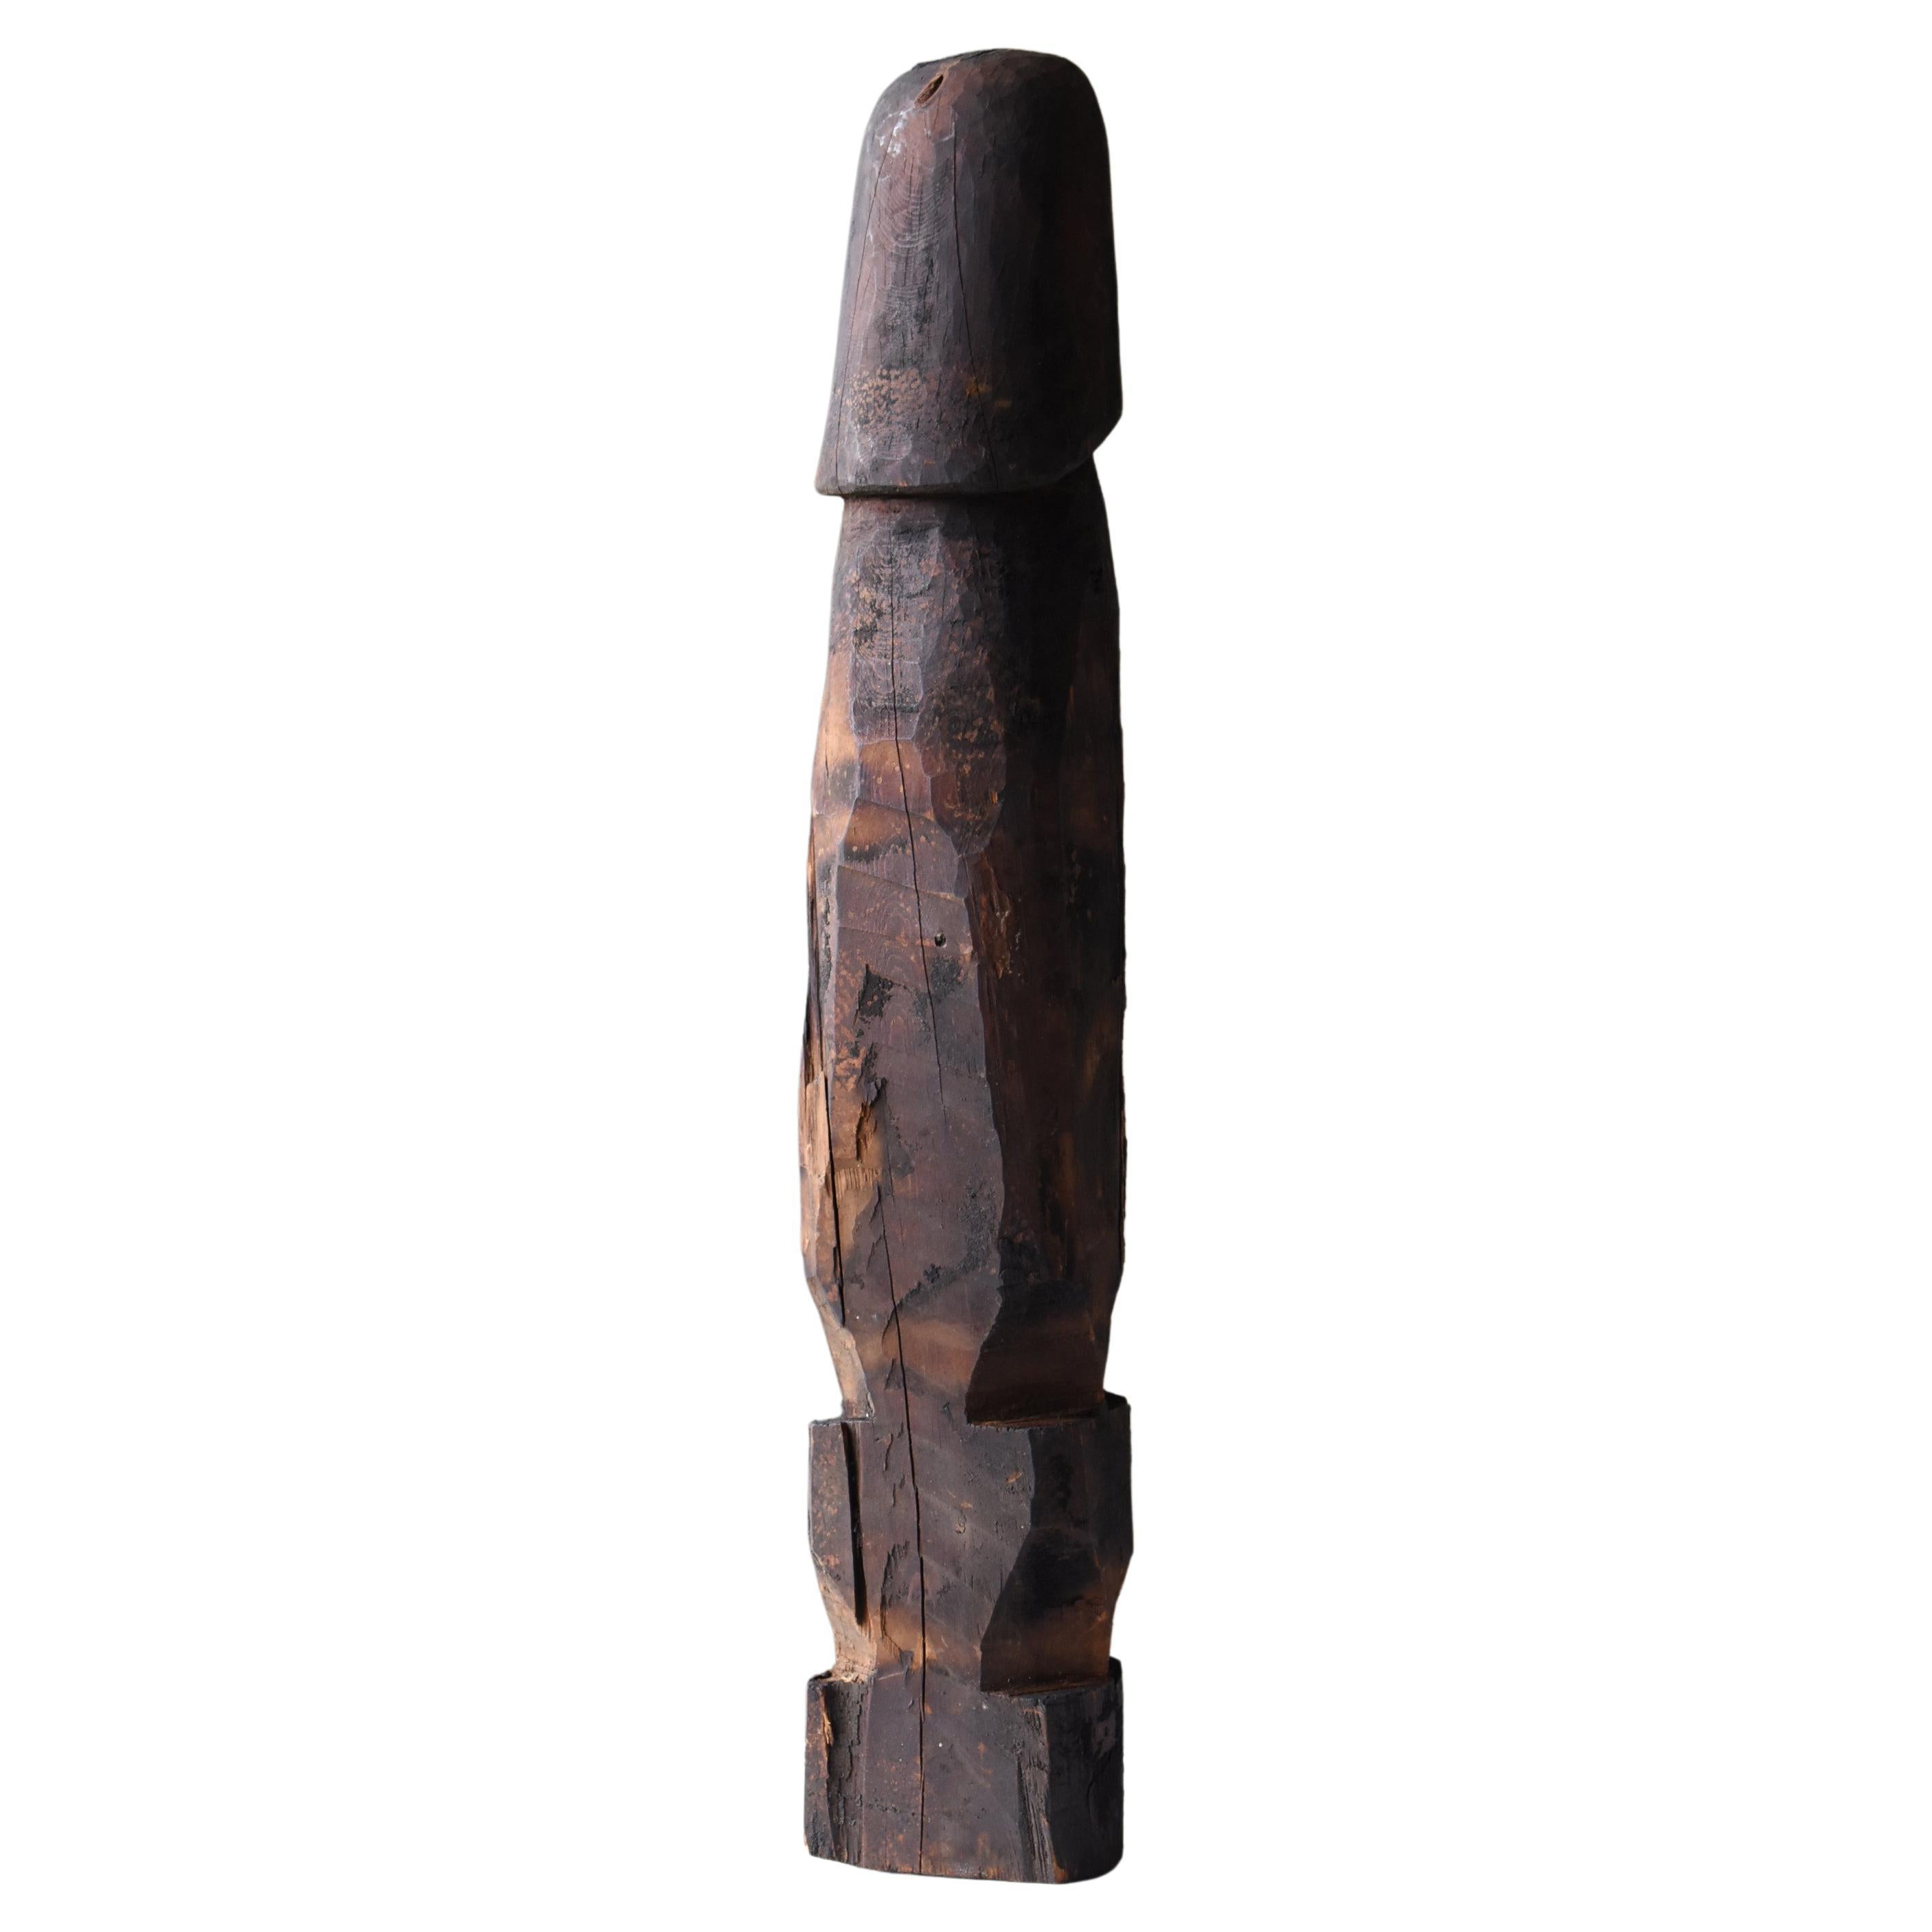 Japanese Antique Wood Carving Penis 1800s-1860s / Figurine Wabi Sabi Mingei